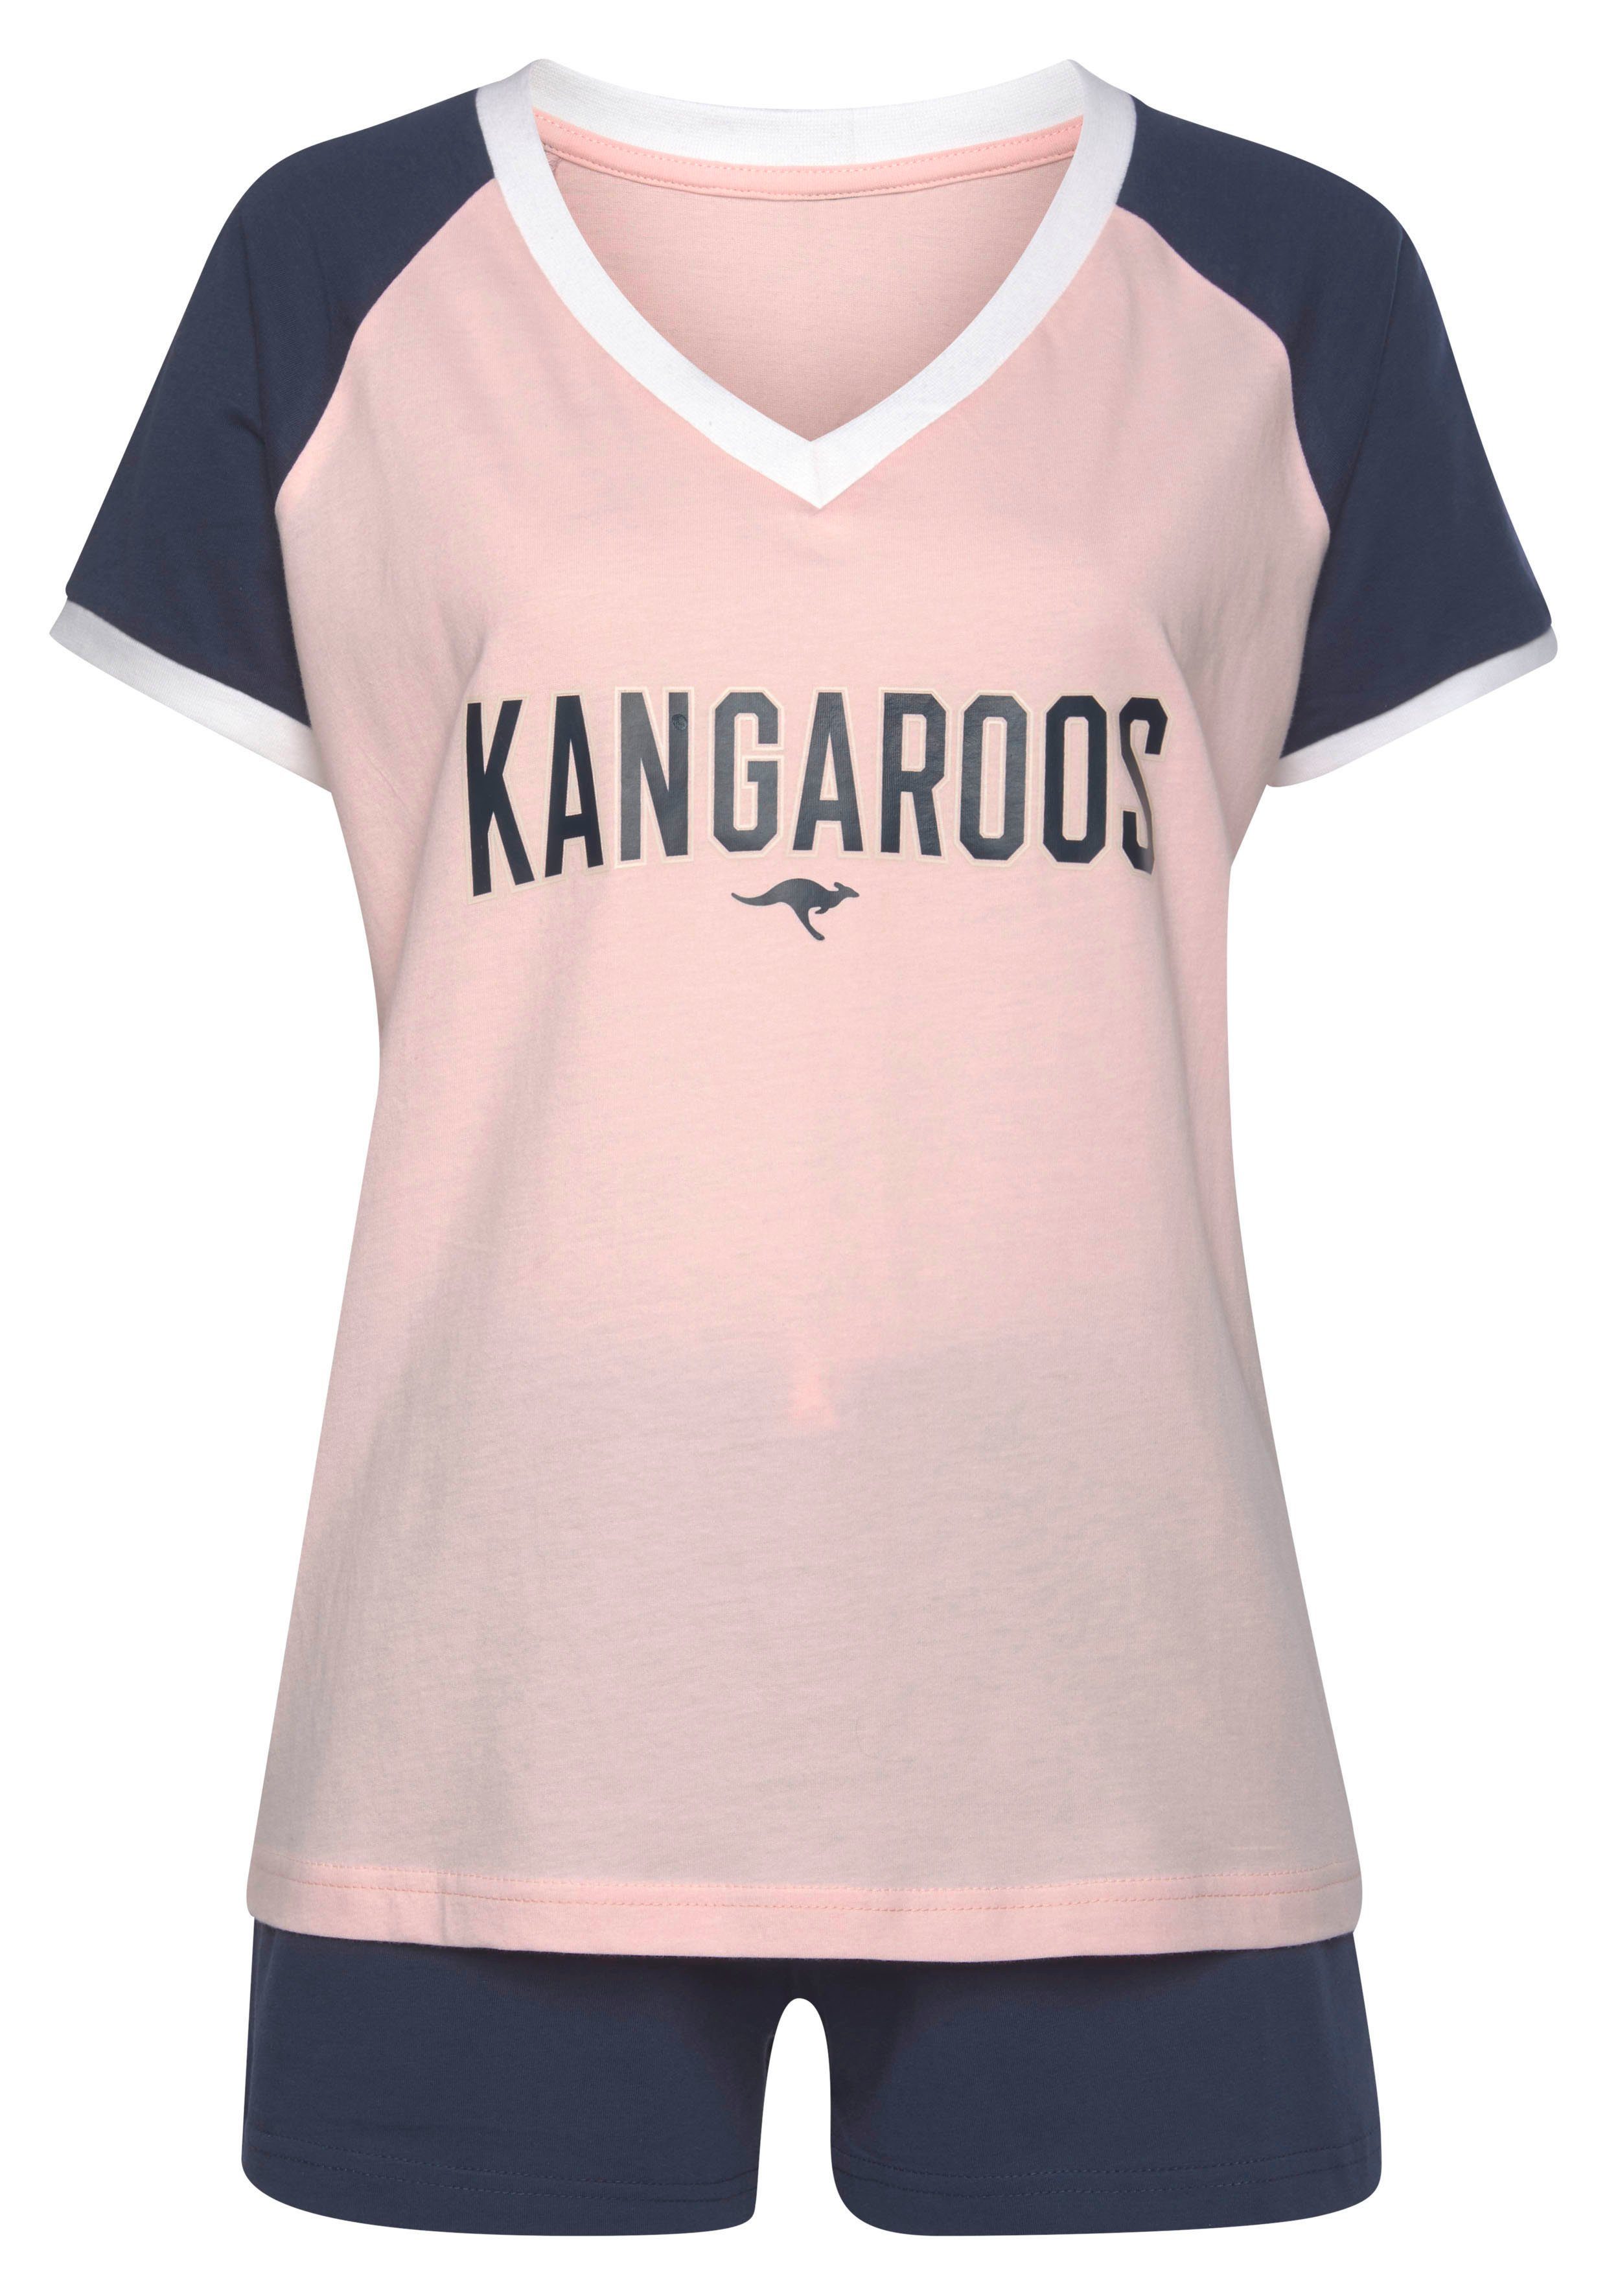 KangaROOS Shorty (2 tlg., 1 Stück) rosa-dunkelblau Raglanärmeln mit kontrastfarbenen